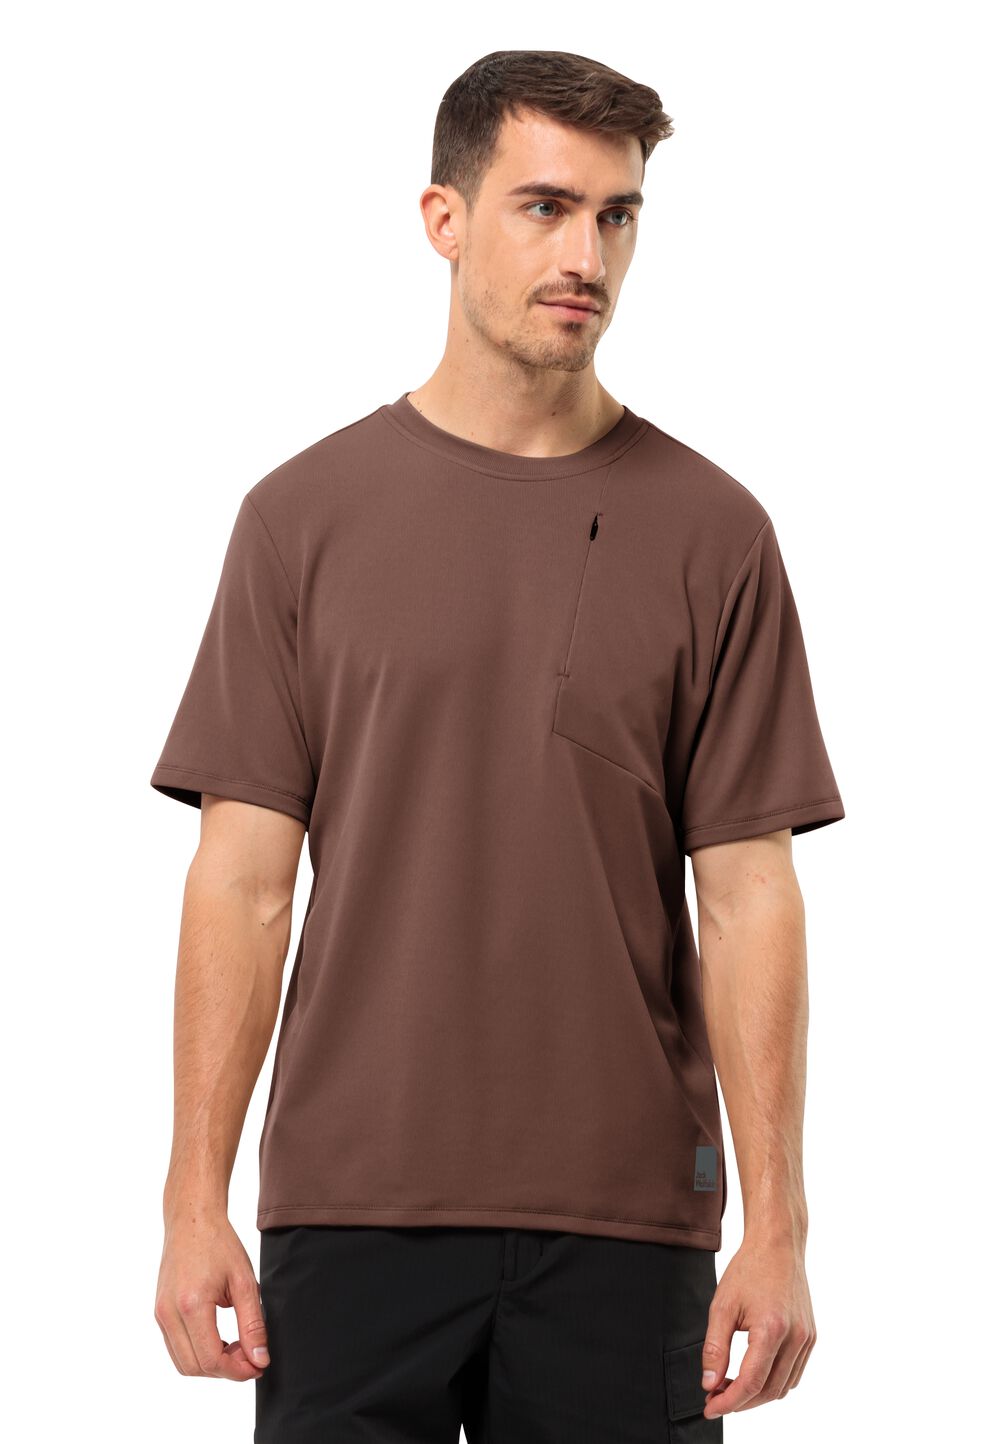 Jack Wolfskin Bike Commute T-Shirt Men Functioneel shirt Heren 3XL bruin dark rust